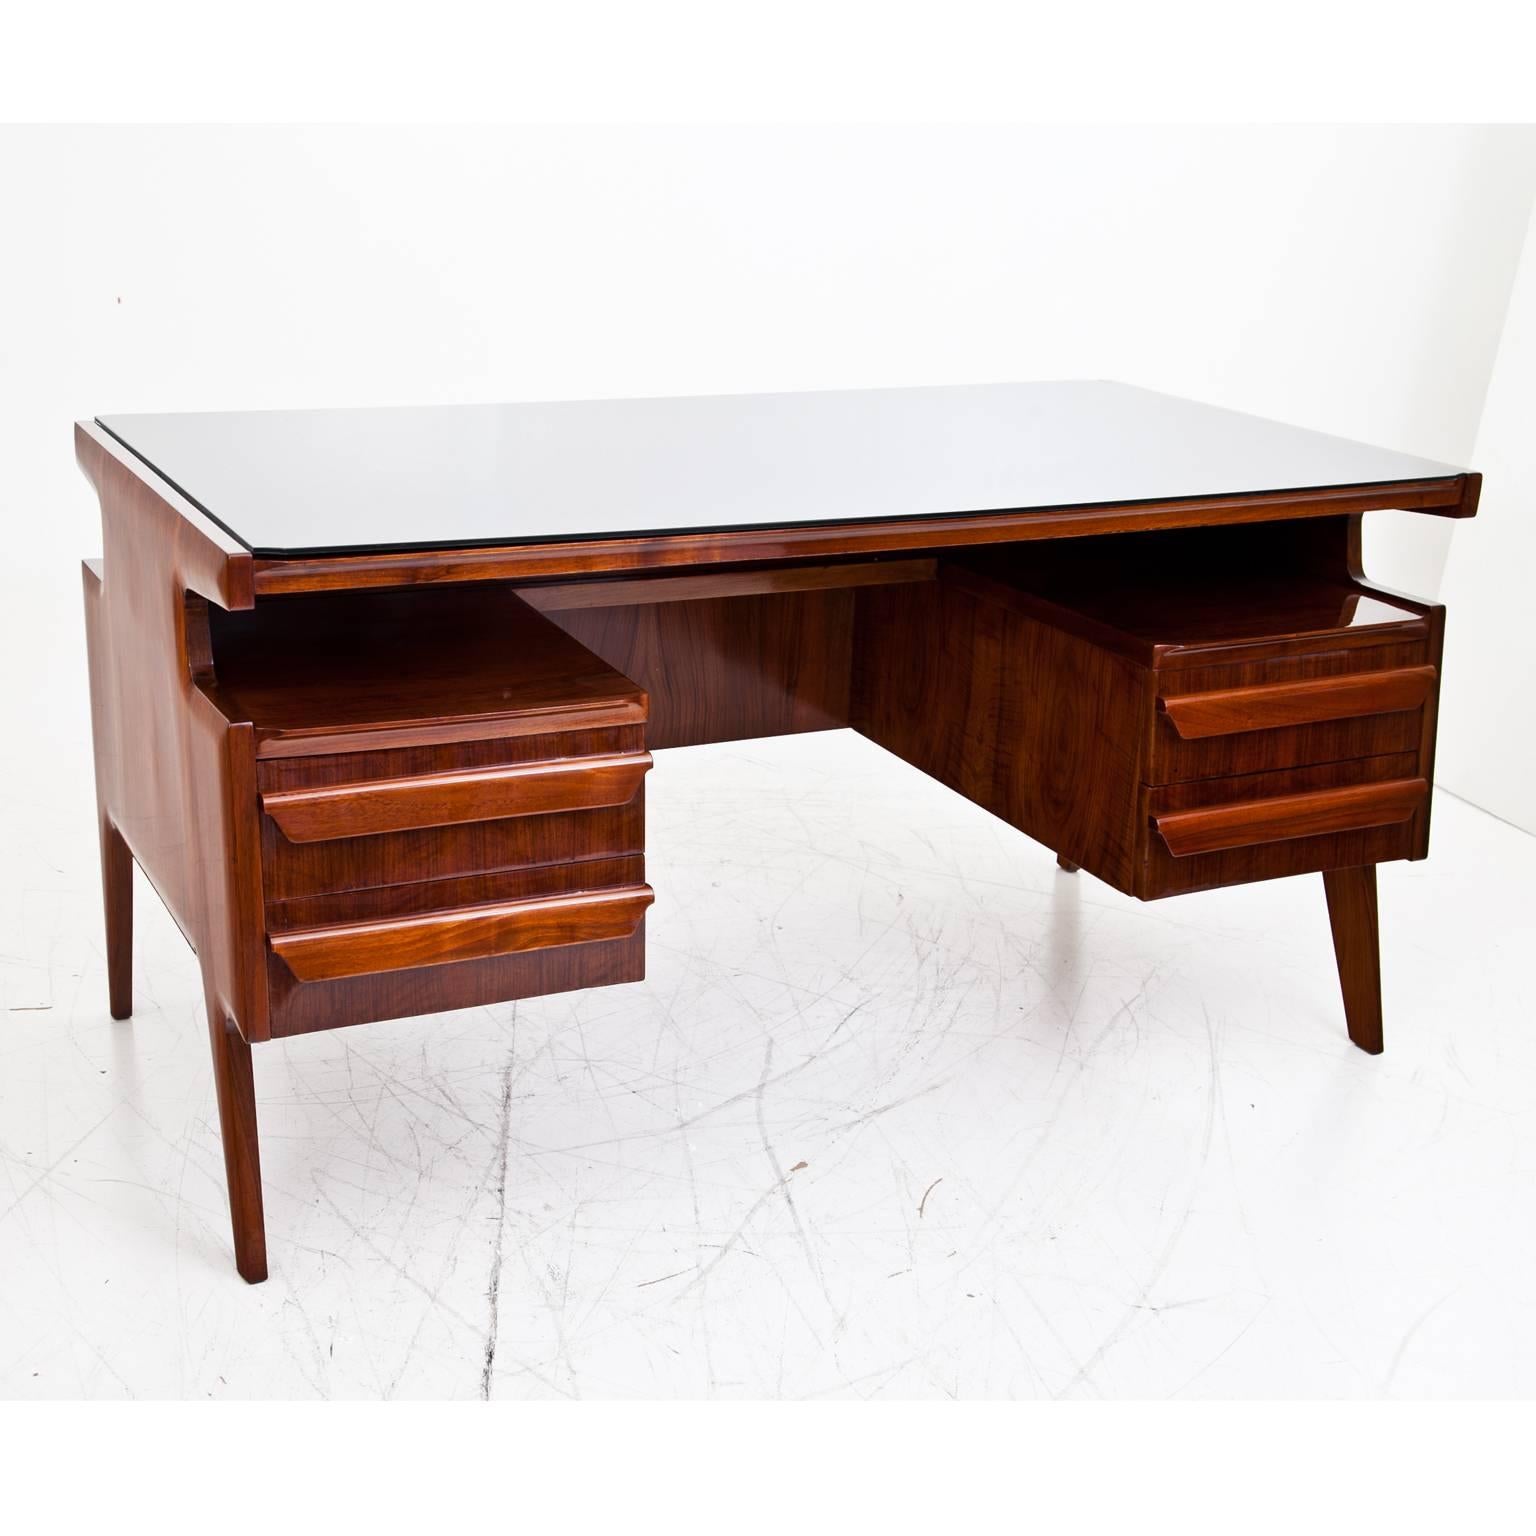 Wood Executive Desk Attributed to Silvio Cavatorta, Italy, 1950s